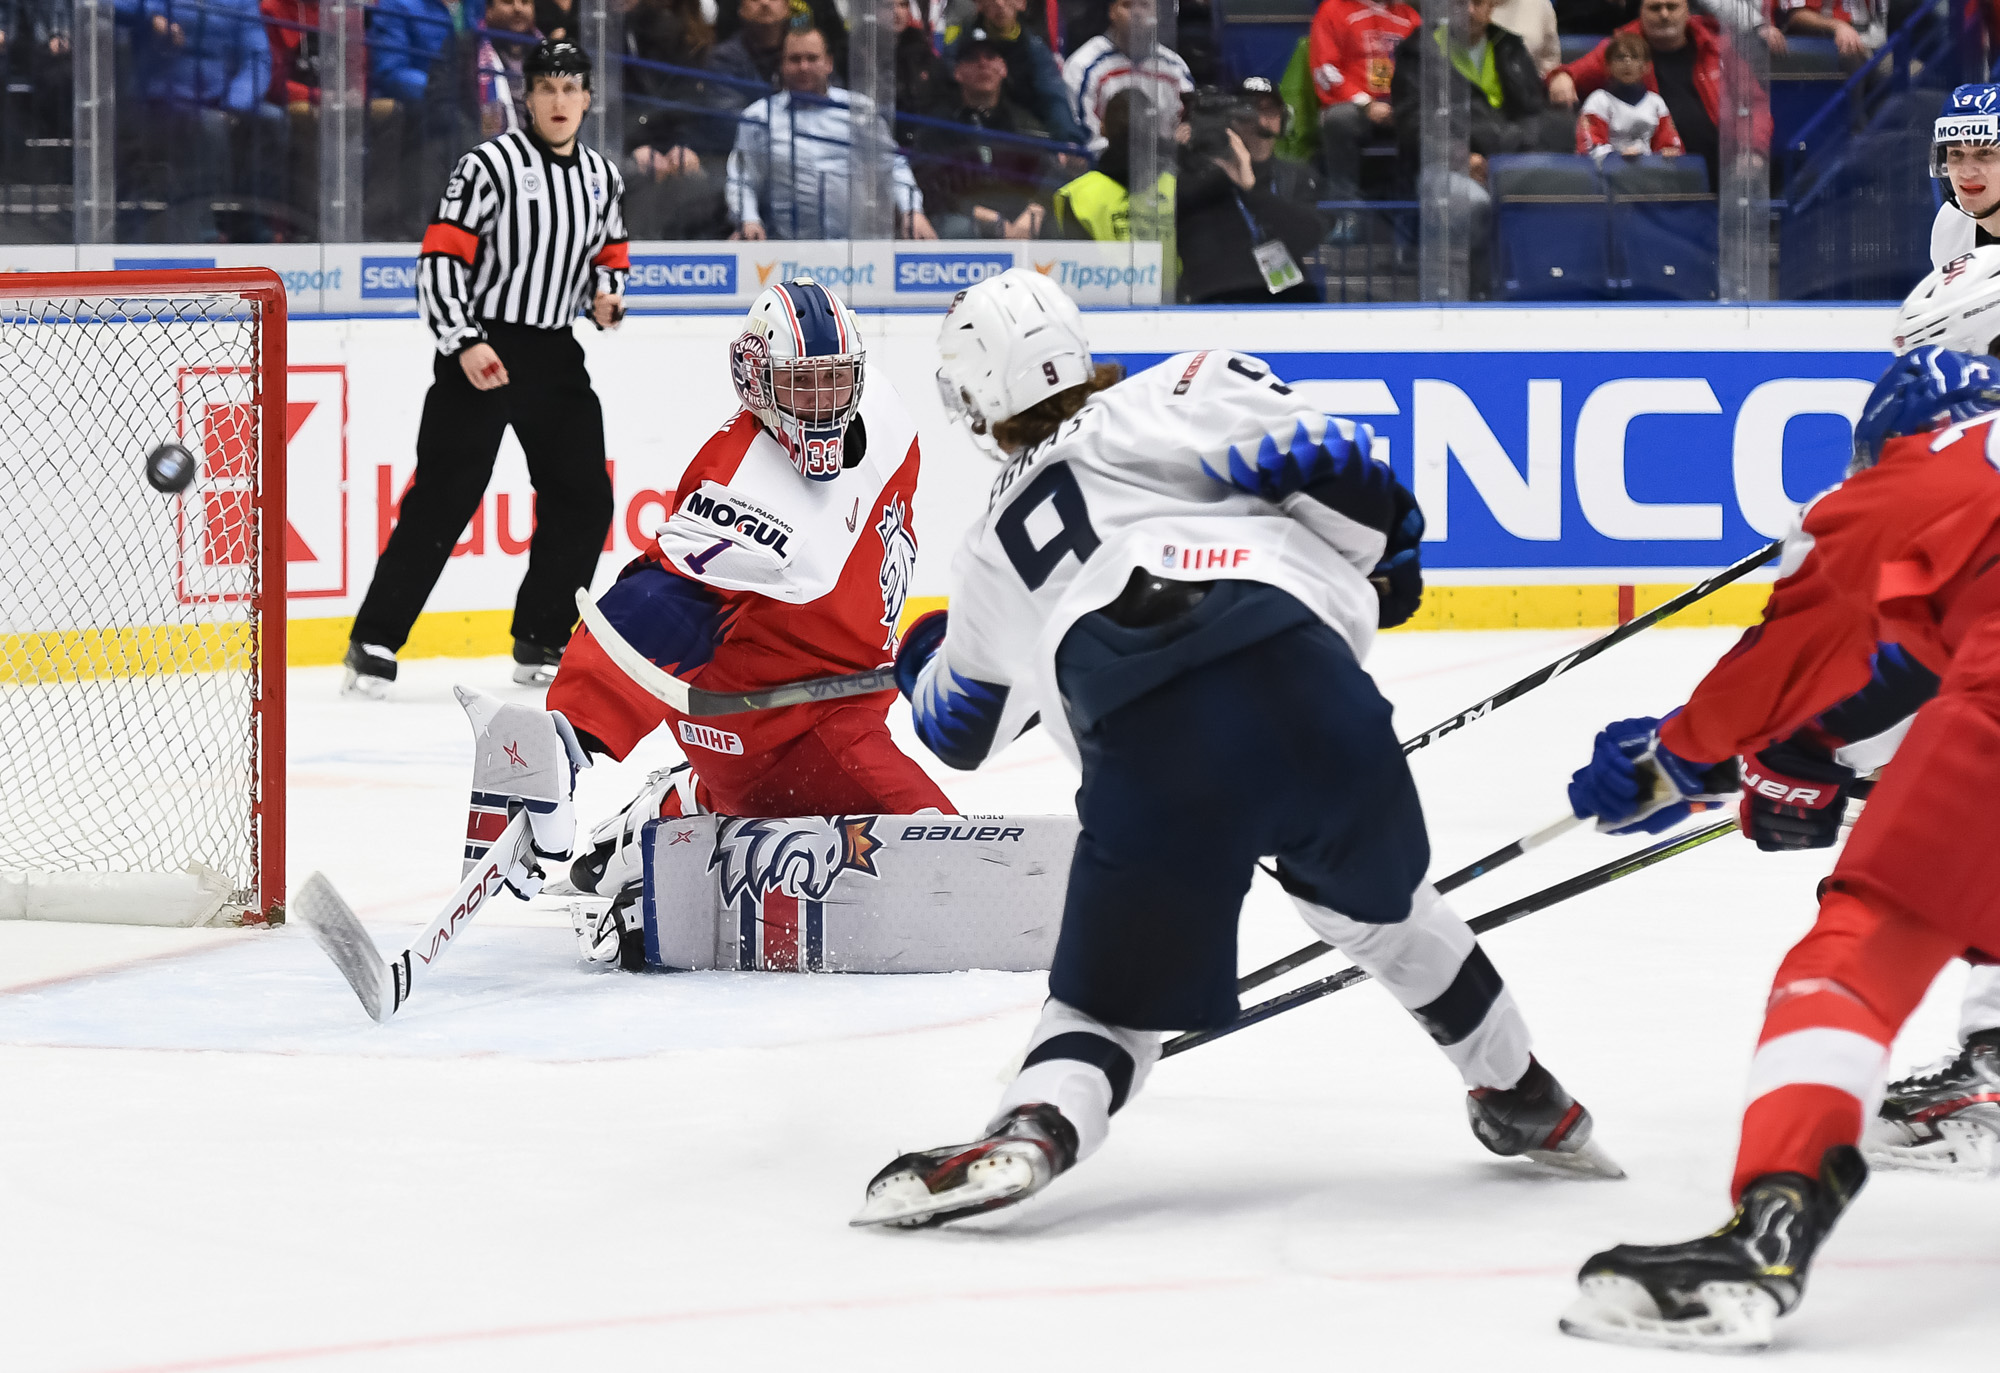 IIHF - Gallery: USA vs. Czech Republic - 2020 IIHF World Junior